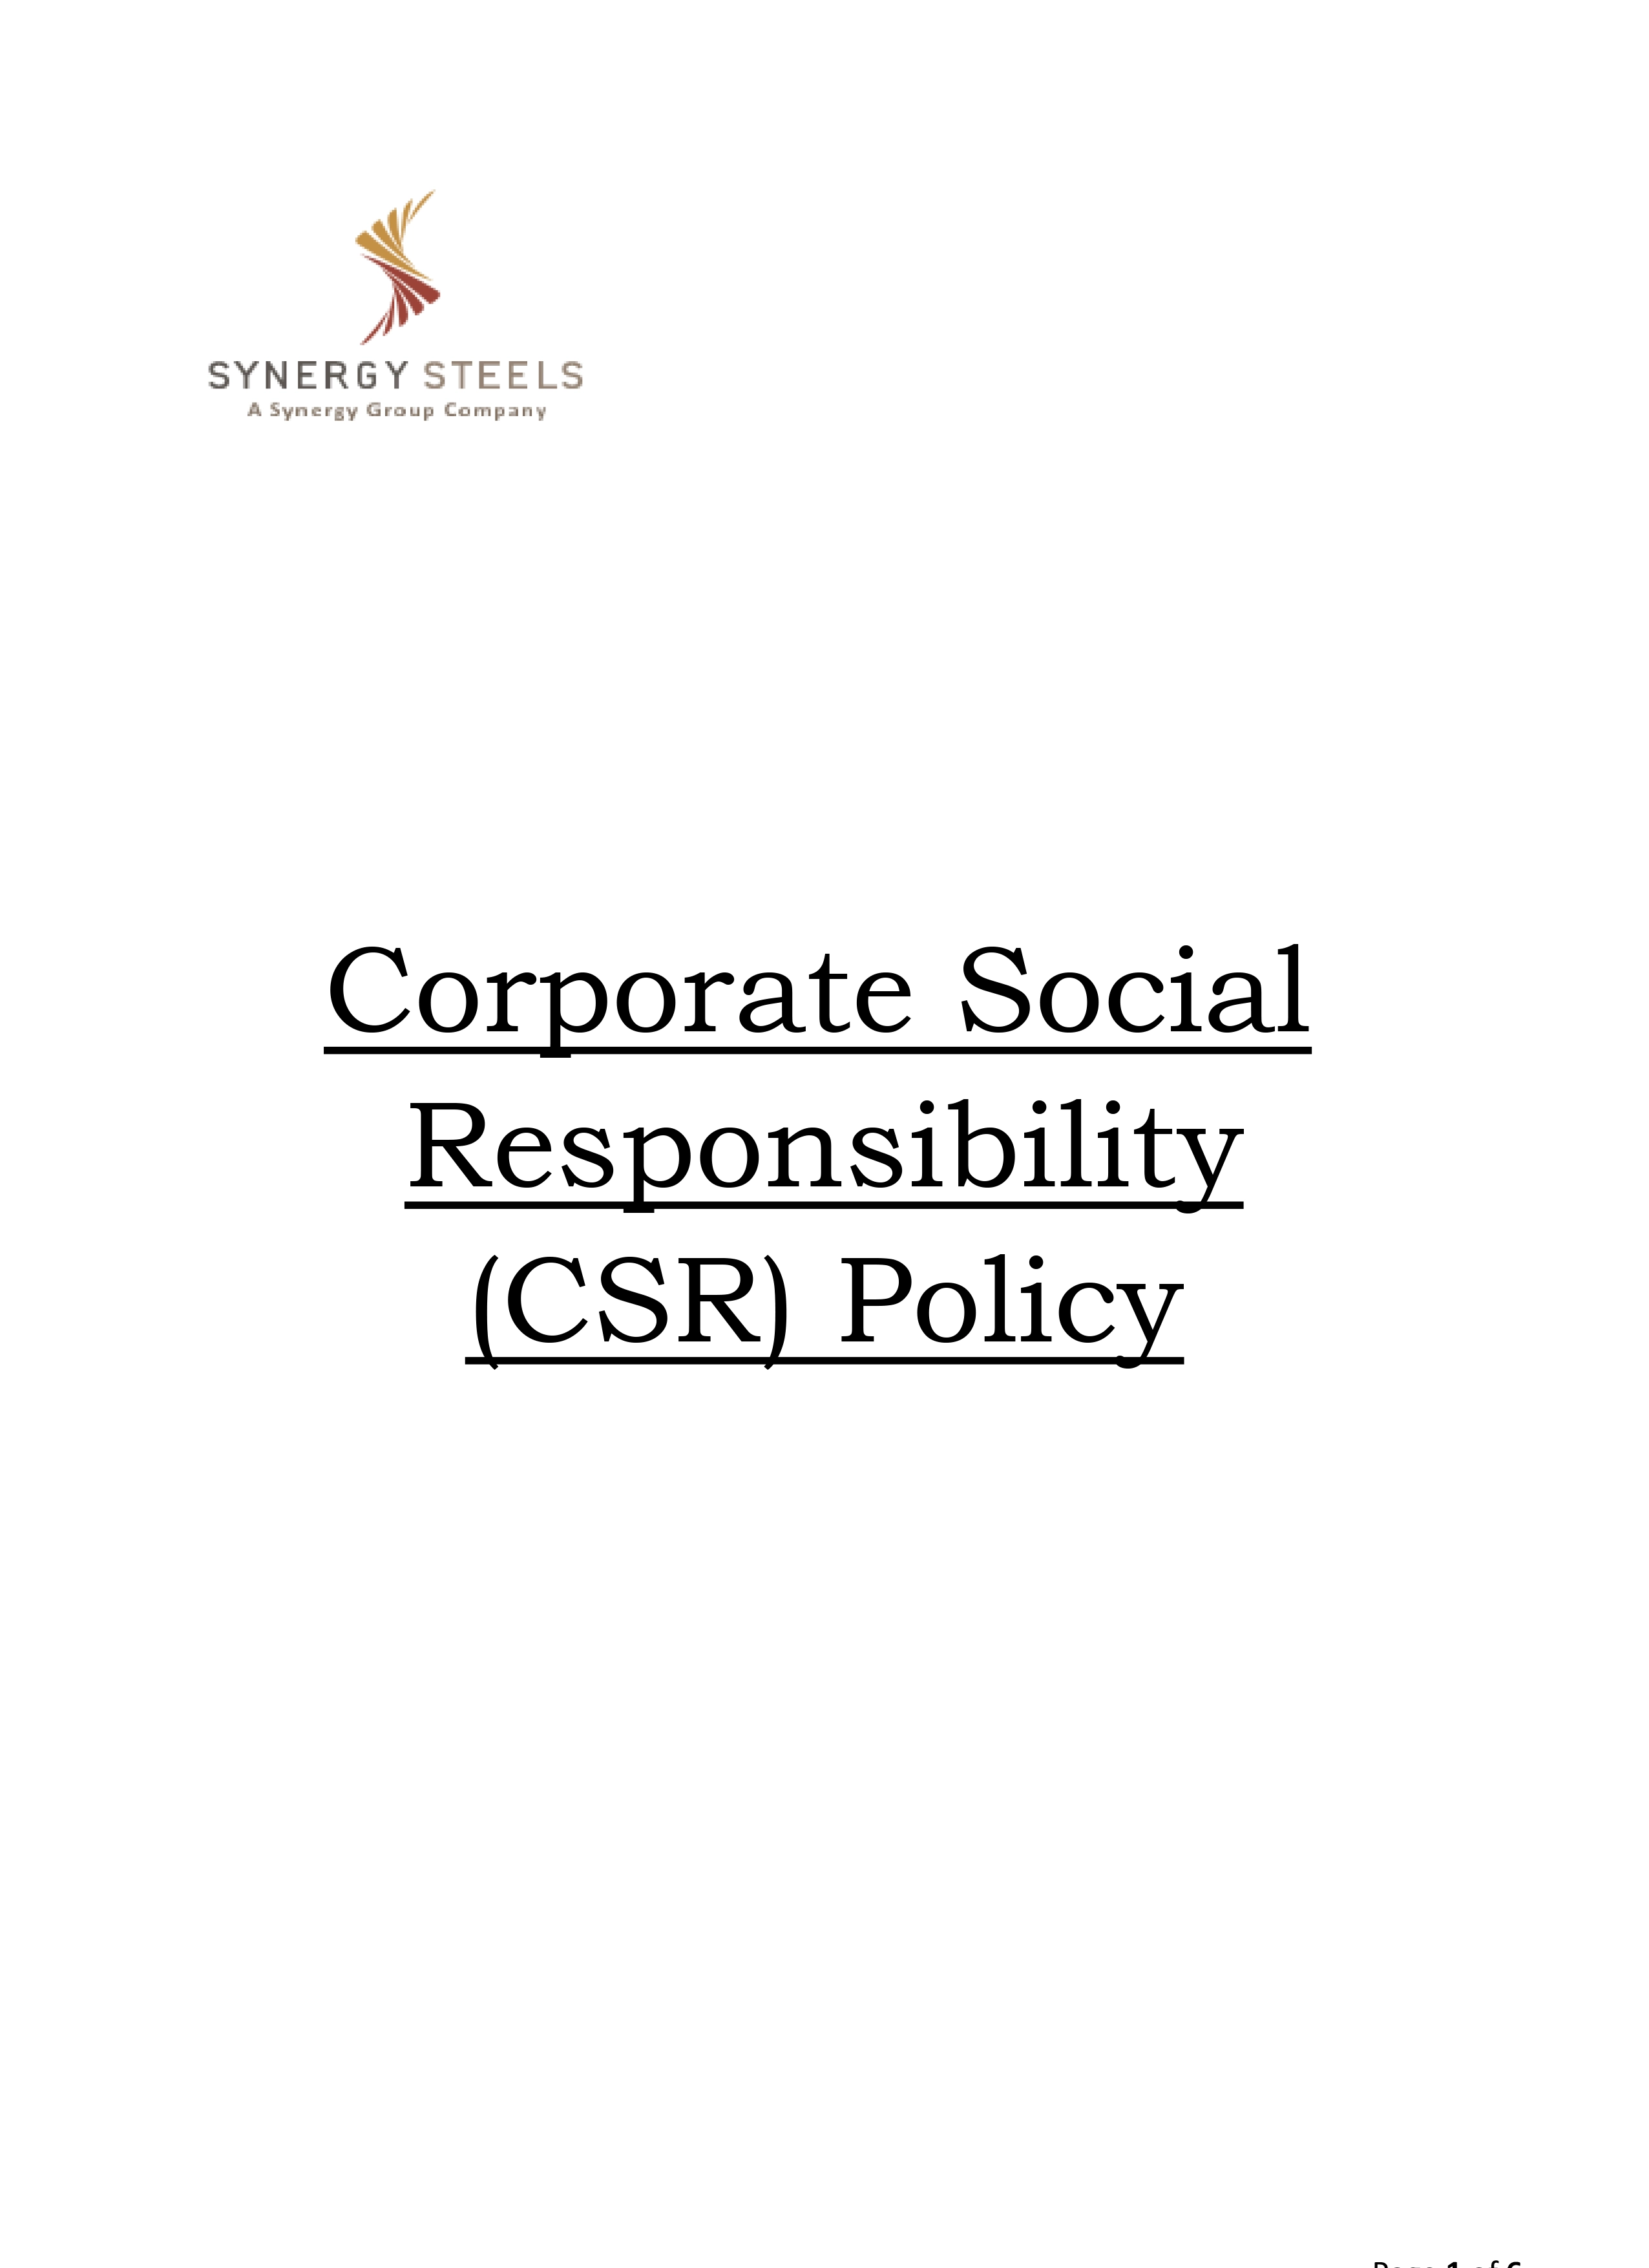 CSR policy Synergy